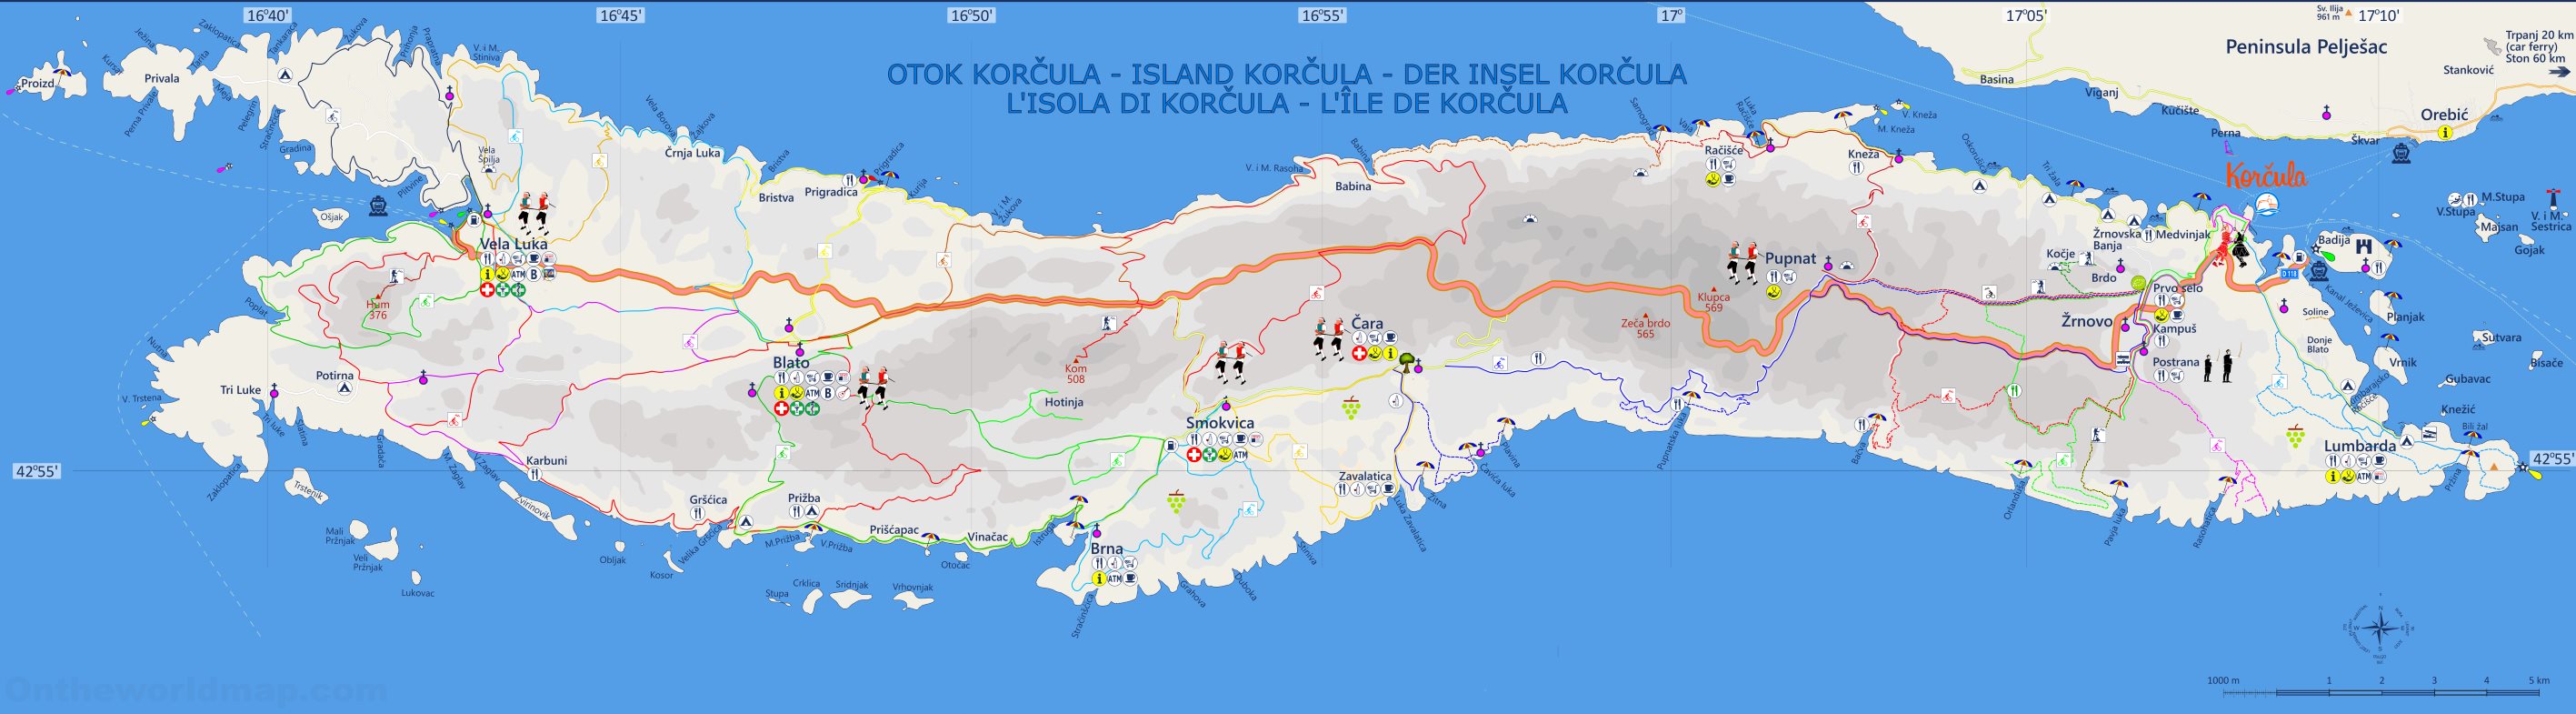 detailed-tourist-map-of-korcula.jpg